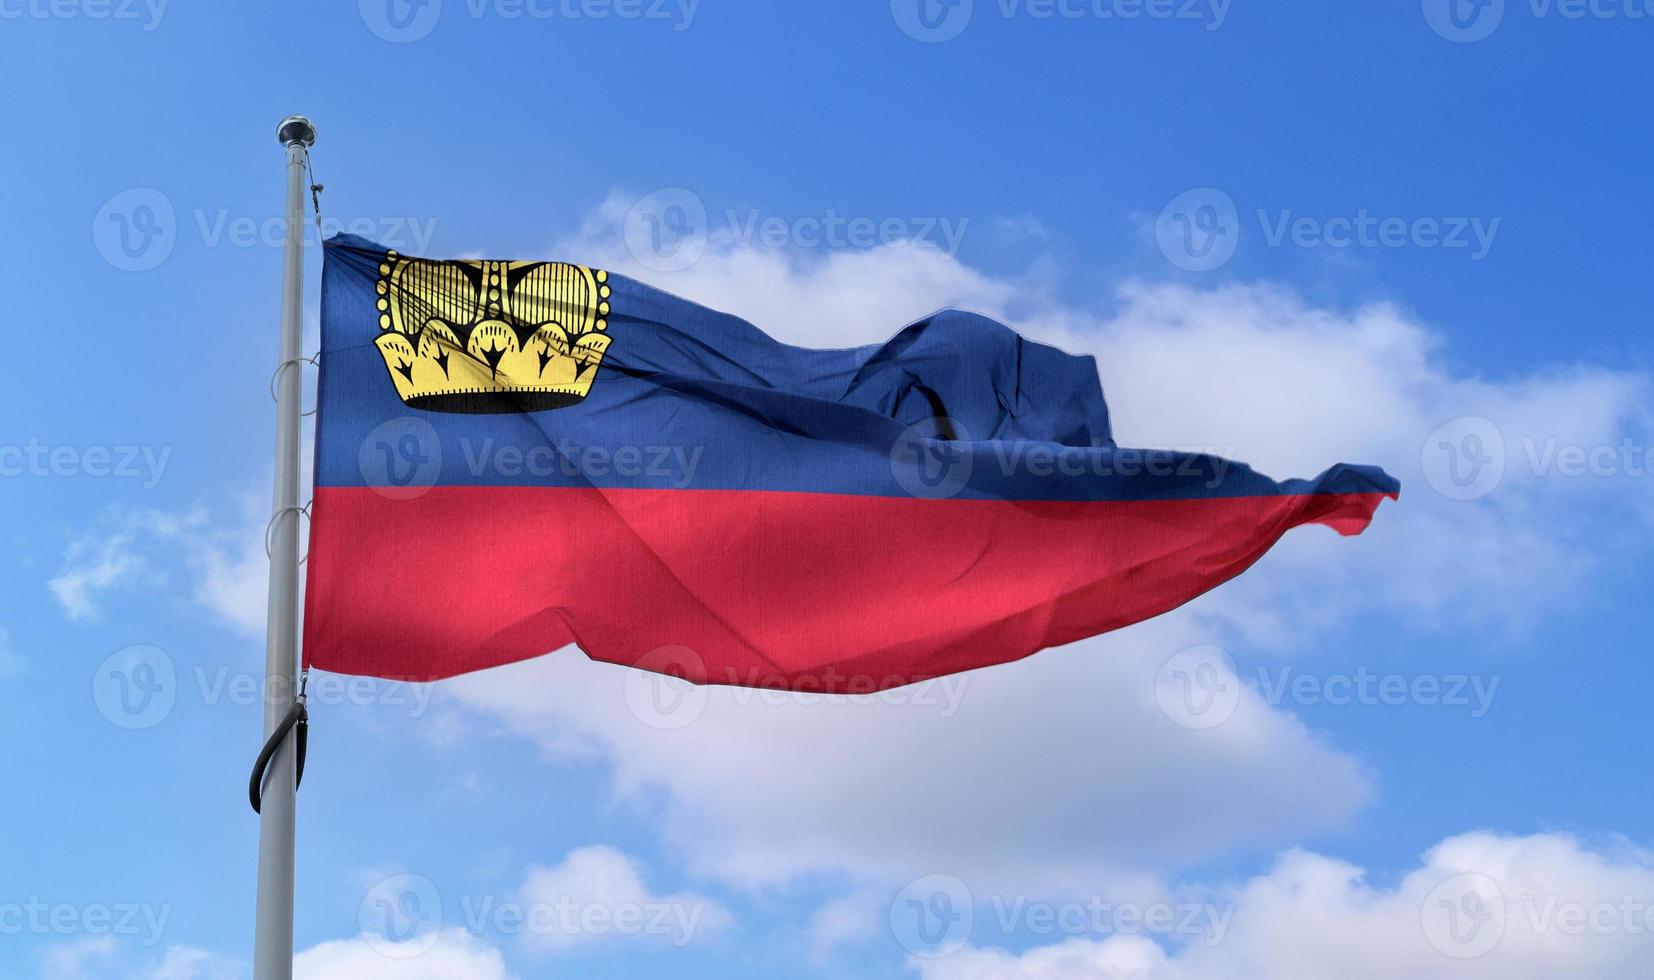 liechtenstein flagga - realistiskt viftande tygflagga. foto